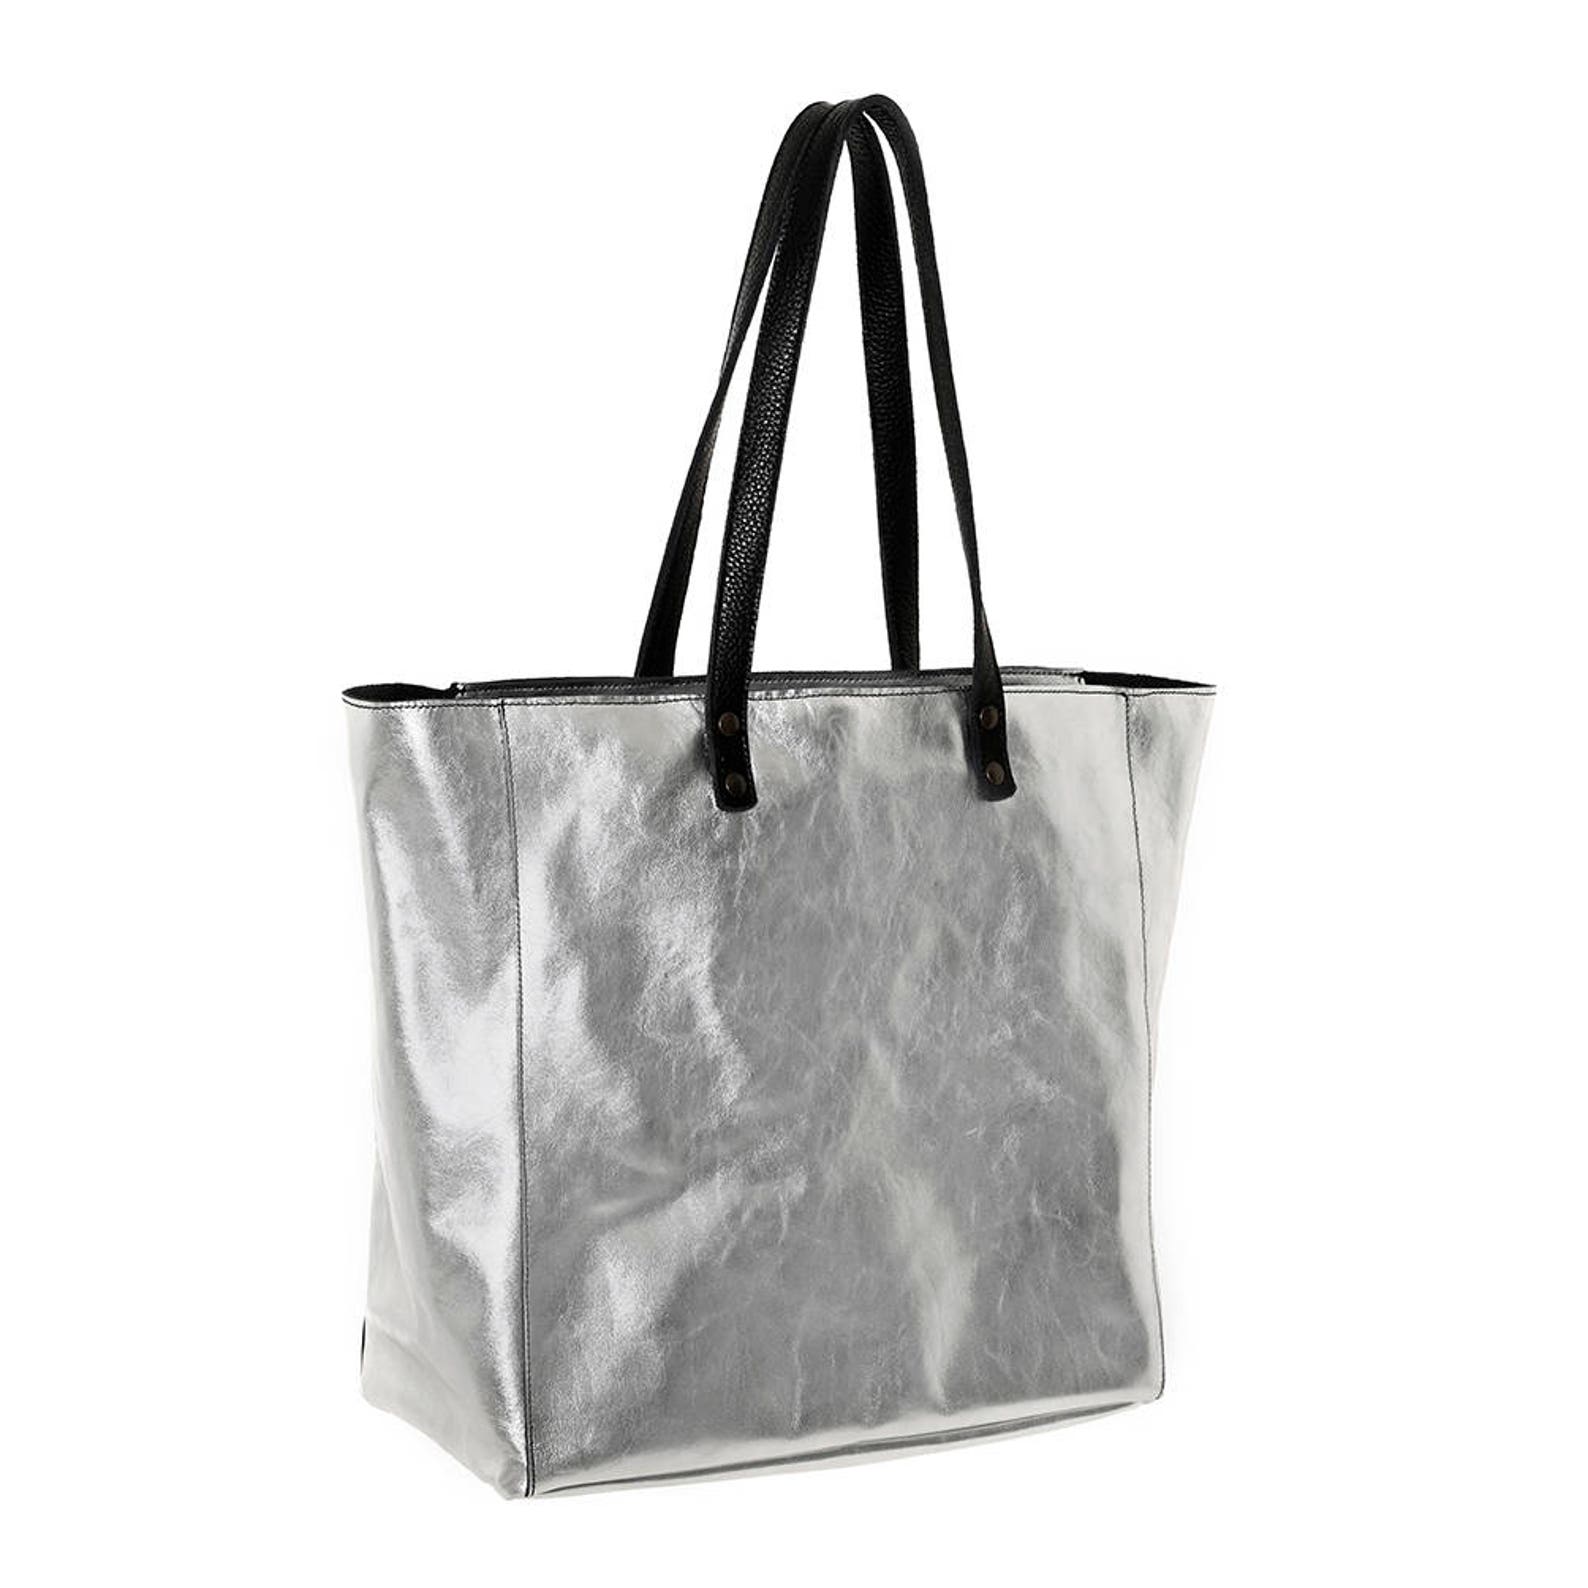 Silver leather tote bag metallic leather shoulder bag large | Etsy